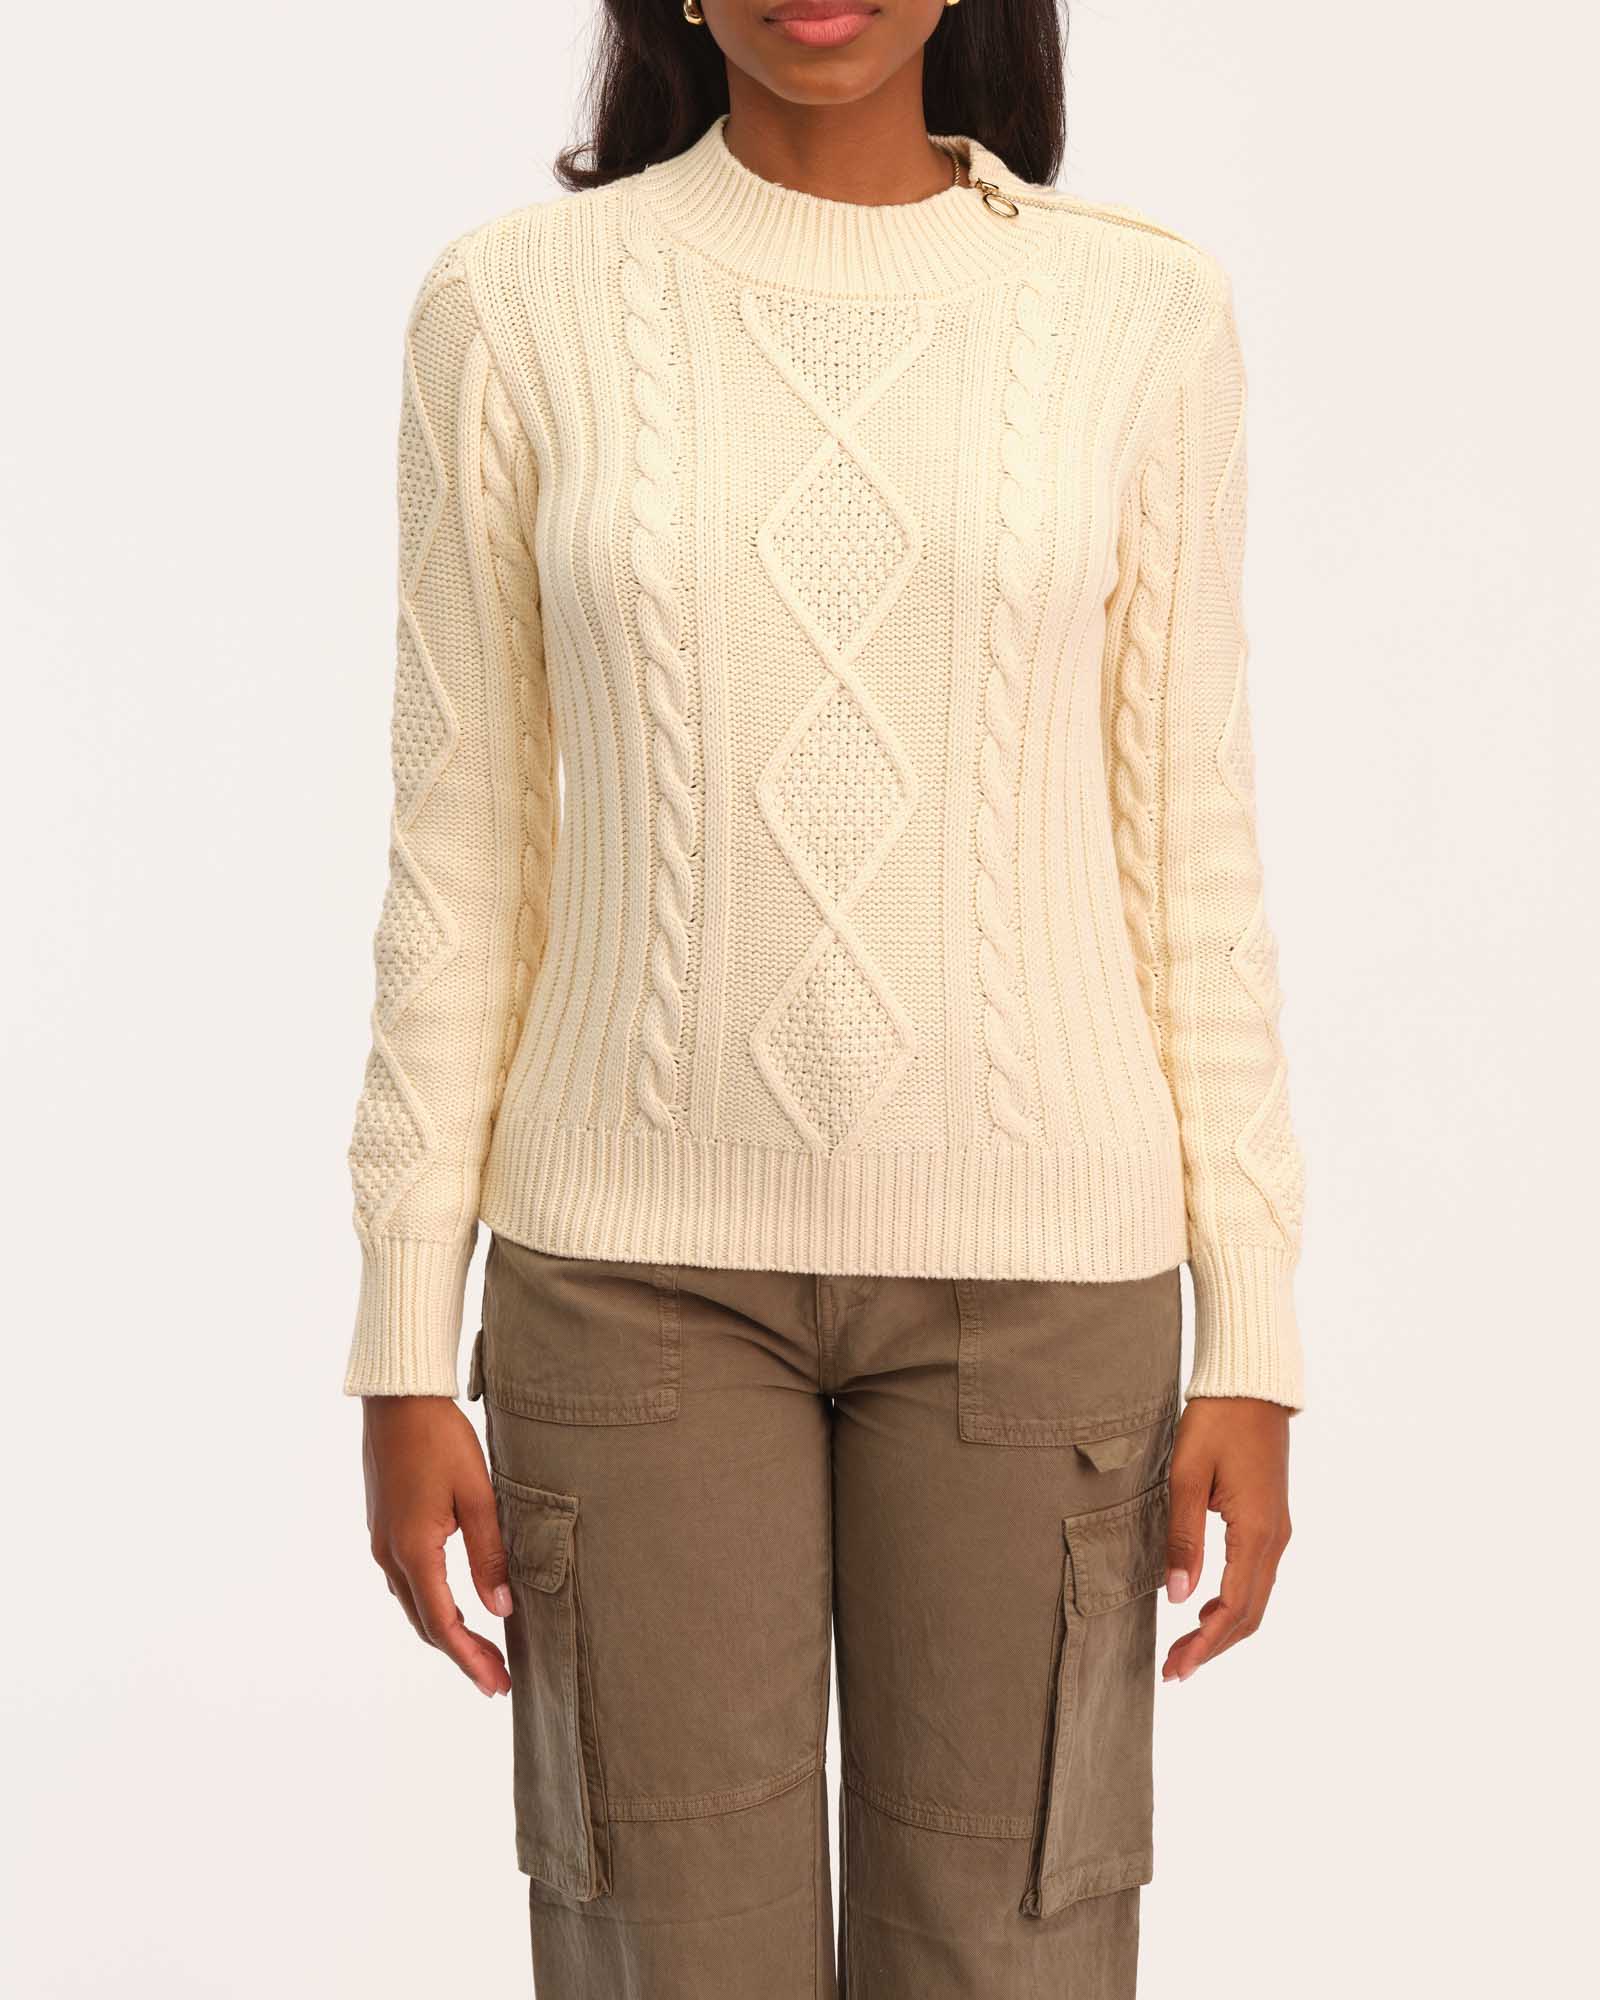 Elie Elie Tahari Women's Cable Knit Sweater with Shoulder Zipper | JANE + MERCER